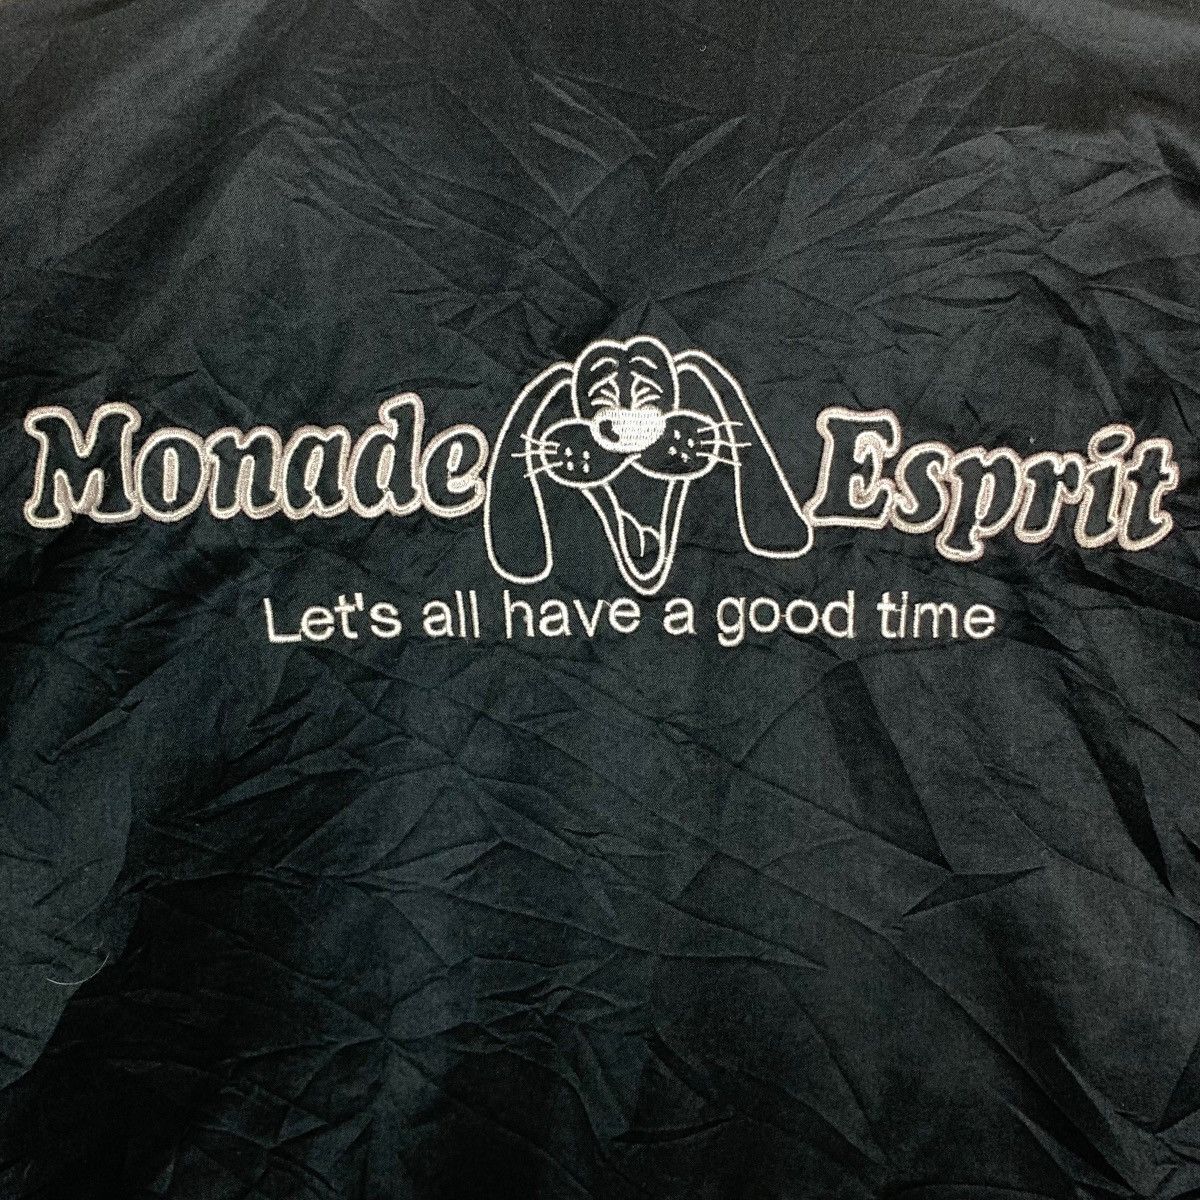 Esprit Vintage Monads Espirit Two Tone Zipper Coach Jacket Size US L / EU 52-54 / 3 - 9 Thumbnail